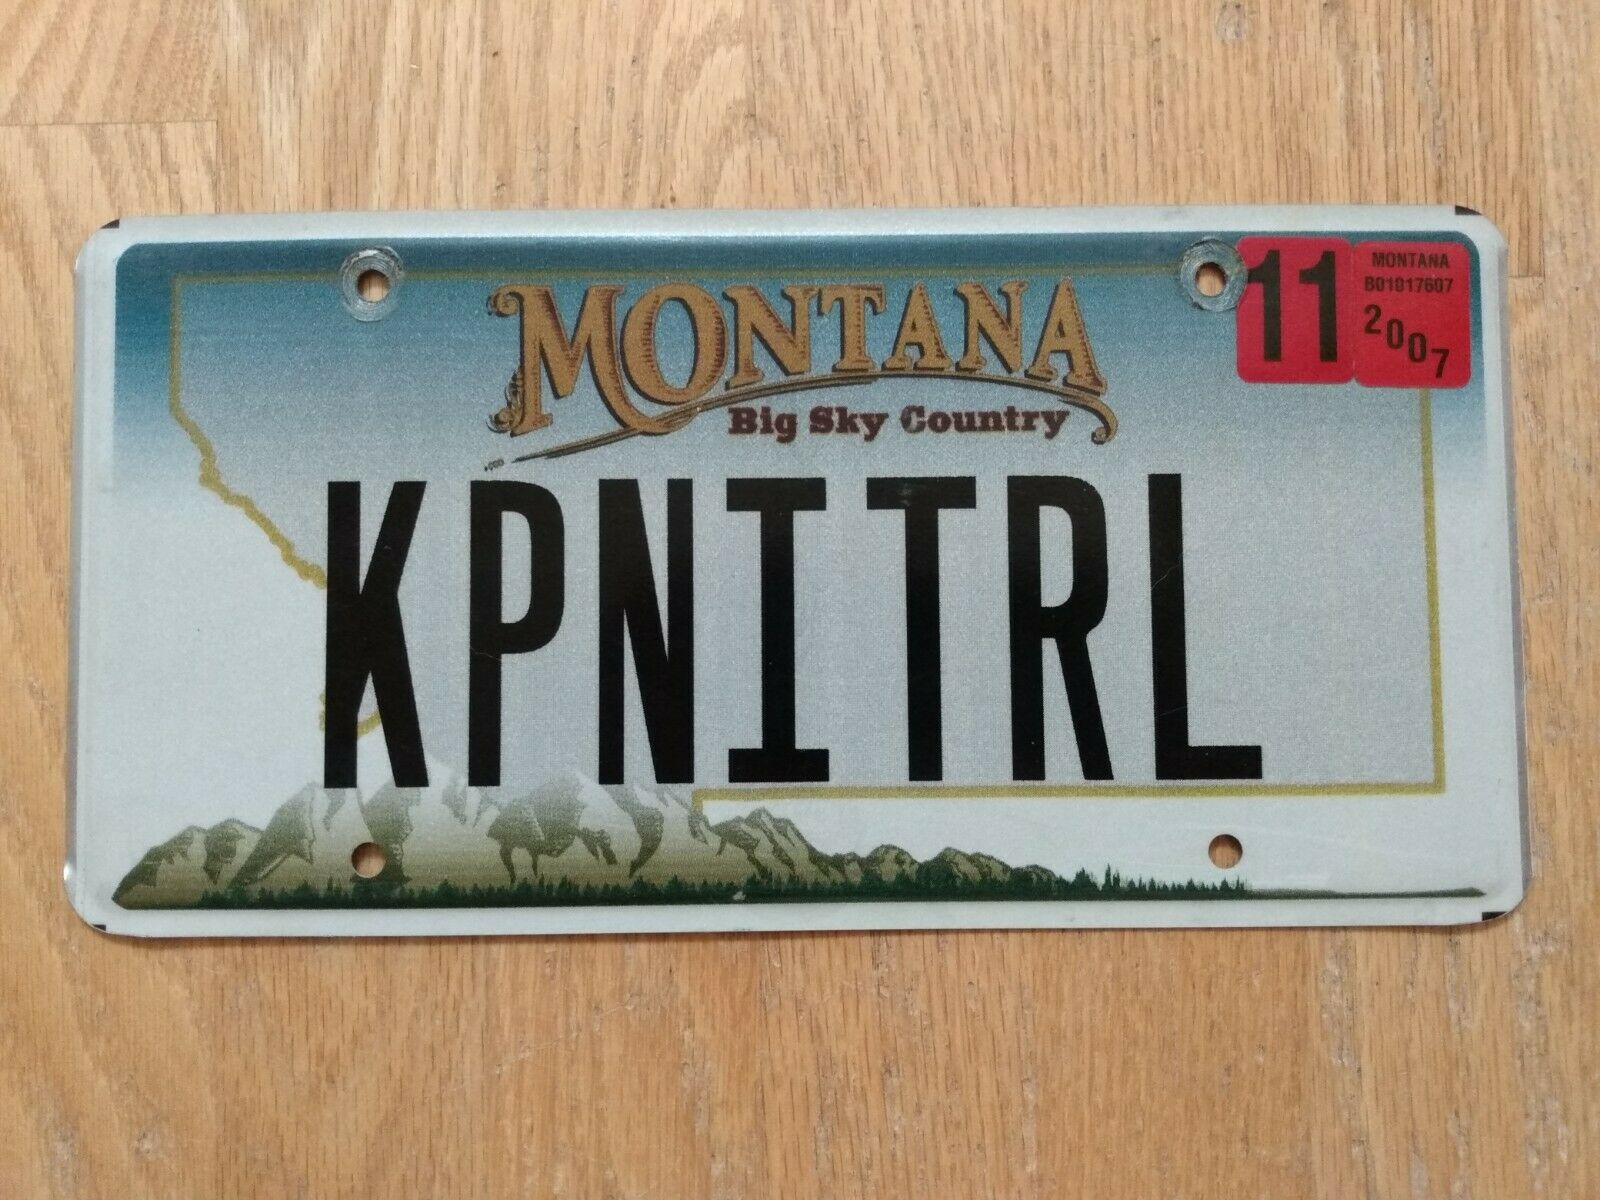 2007 Montana Big Sky Country License Plate Kpnitrl Vanity Plate Keepin It Real